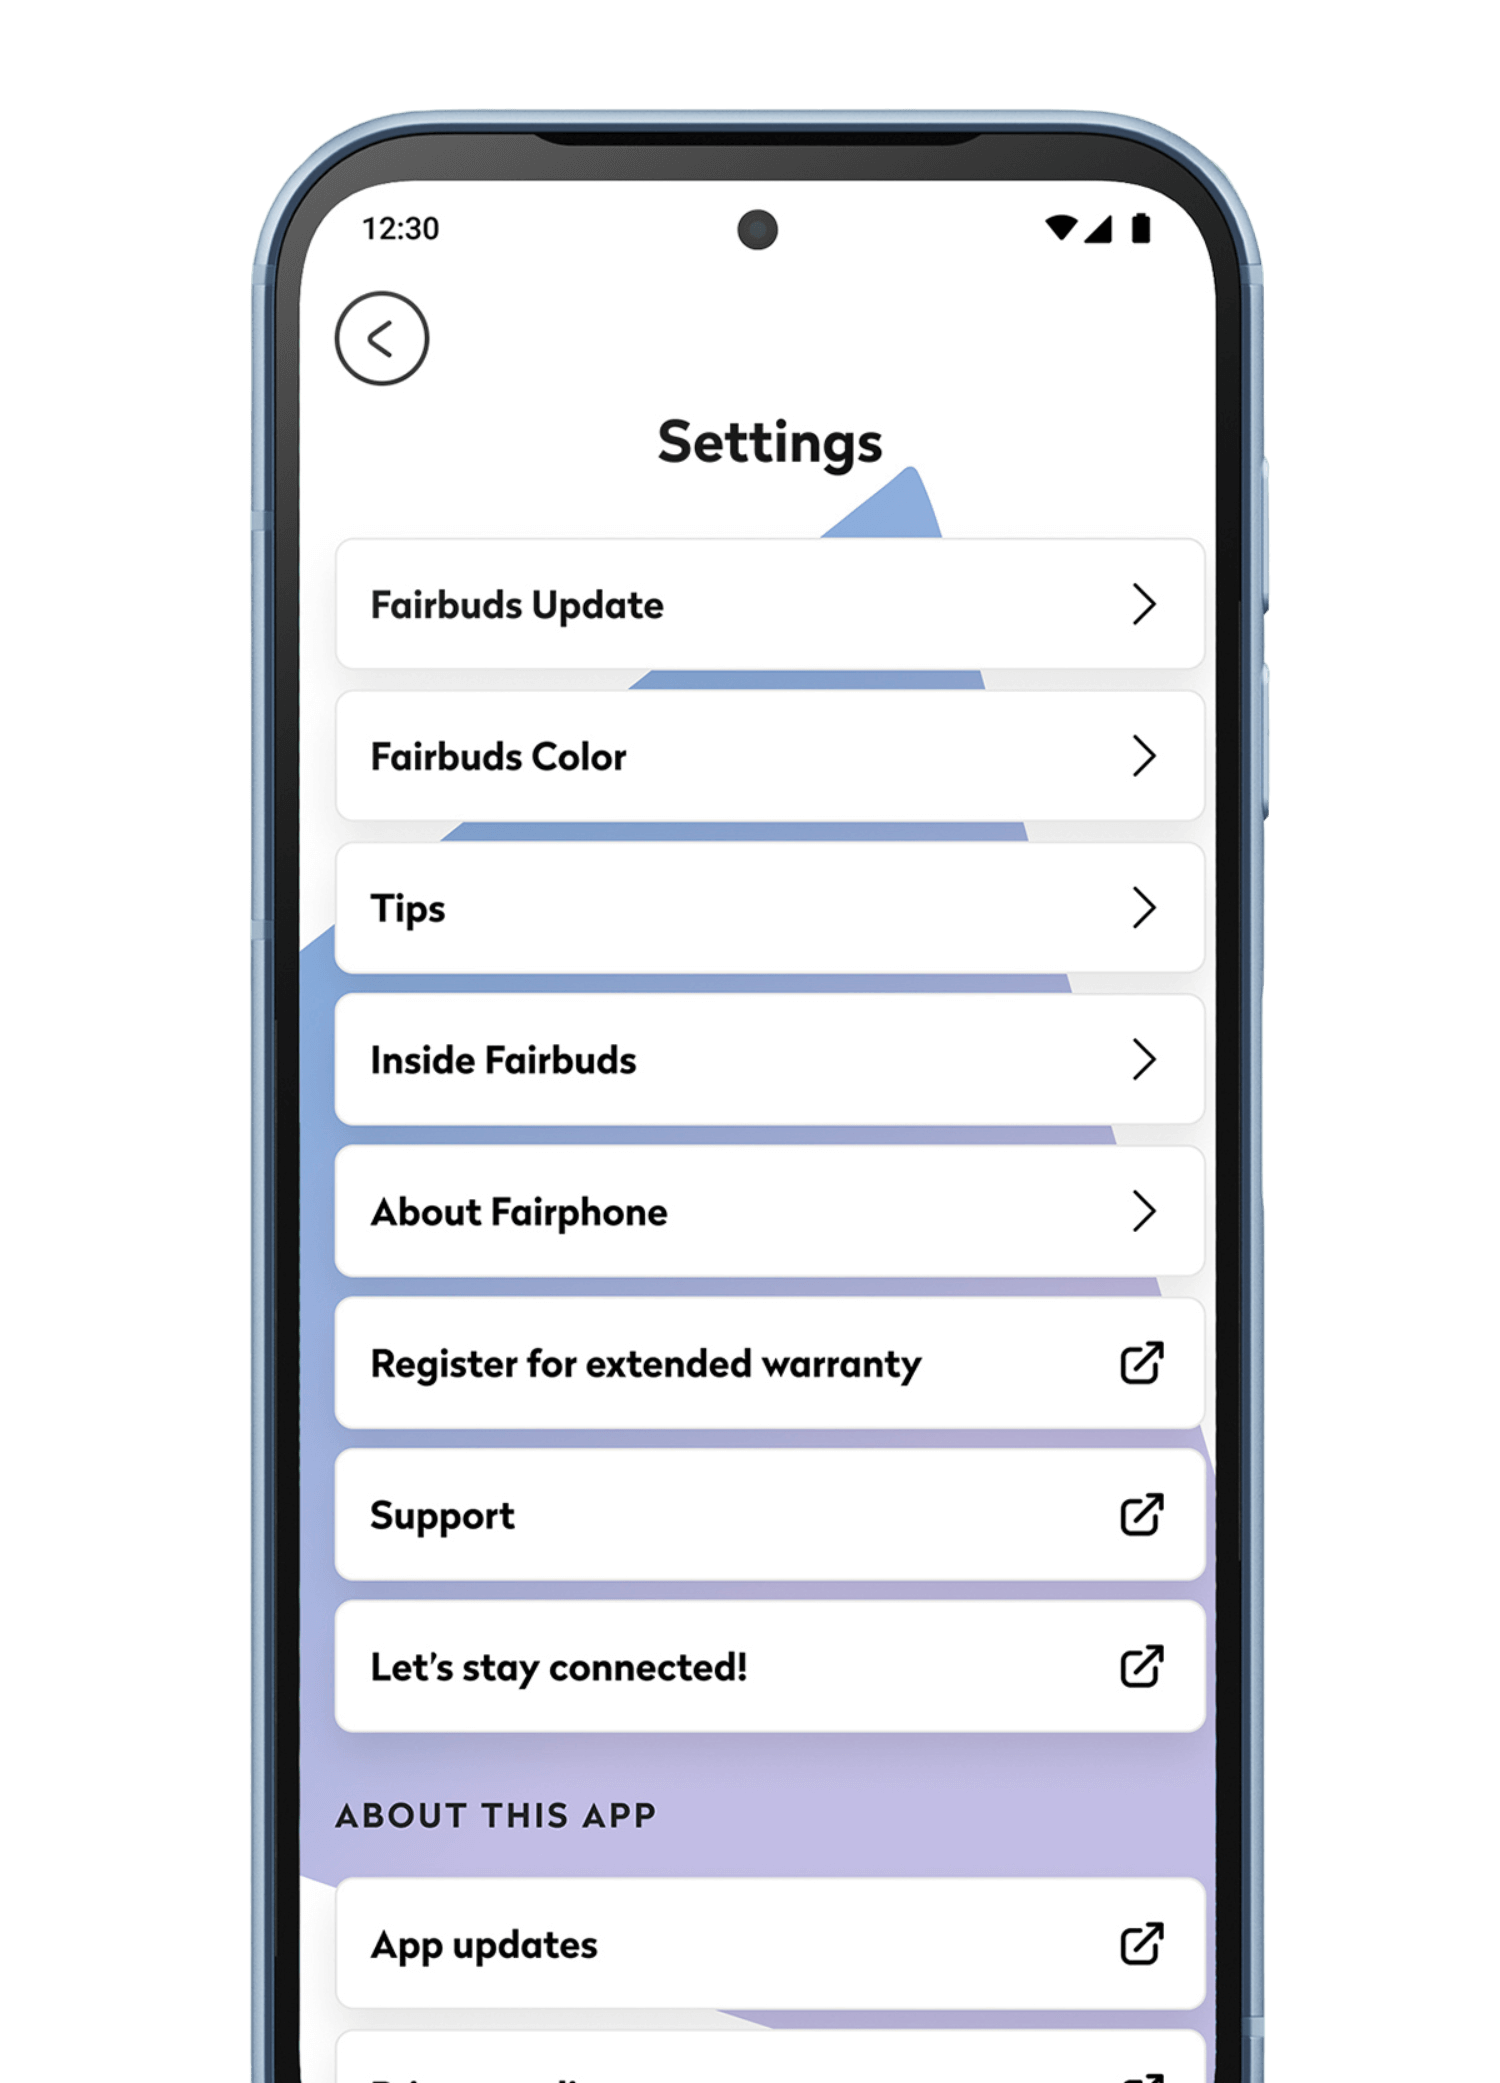 fairbuds app settings interface